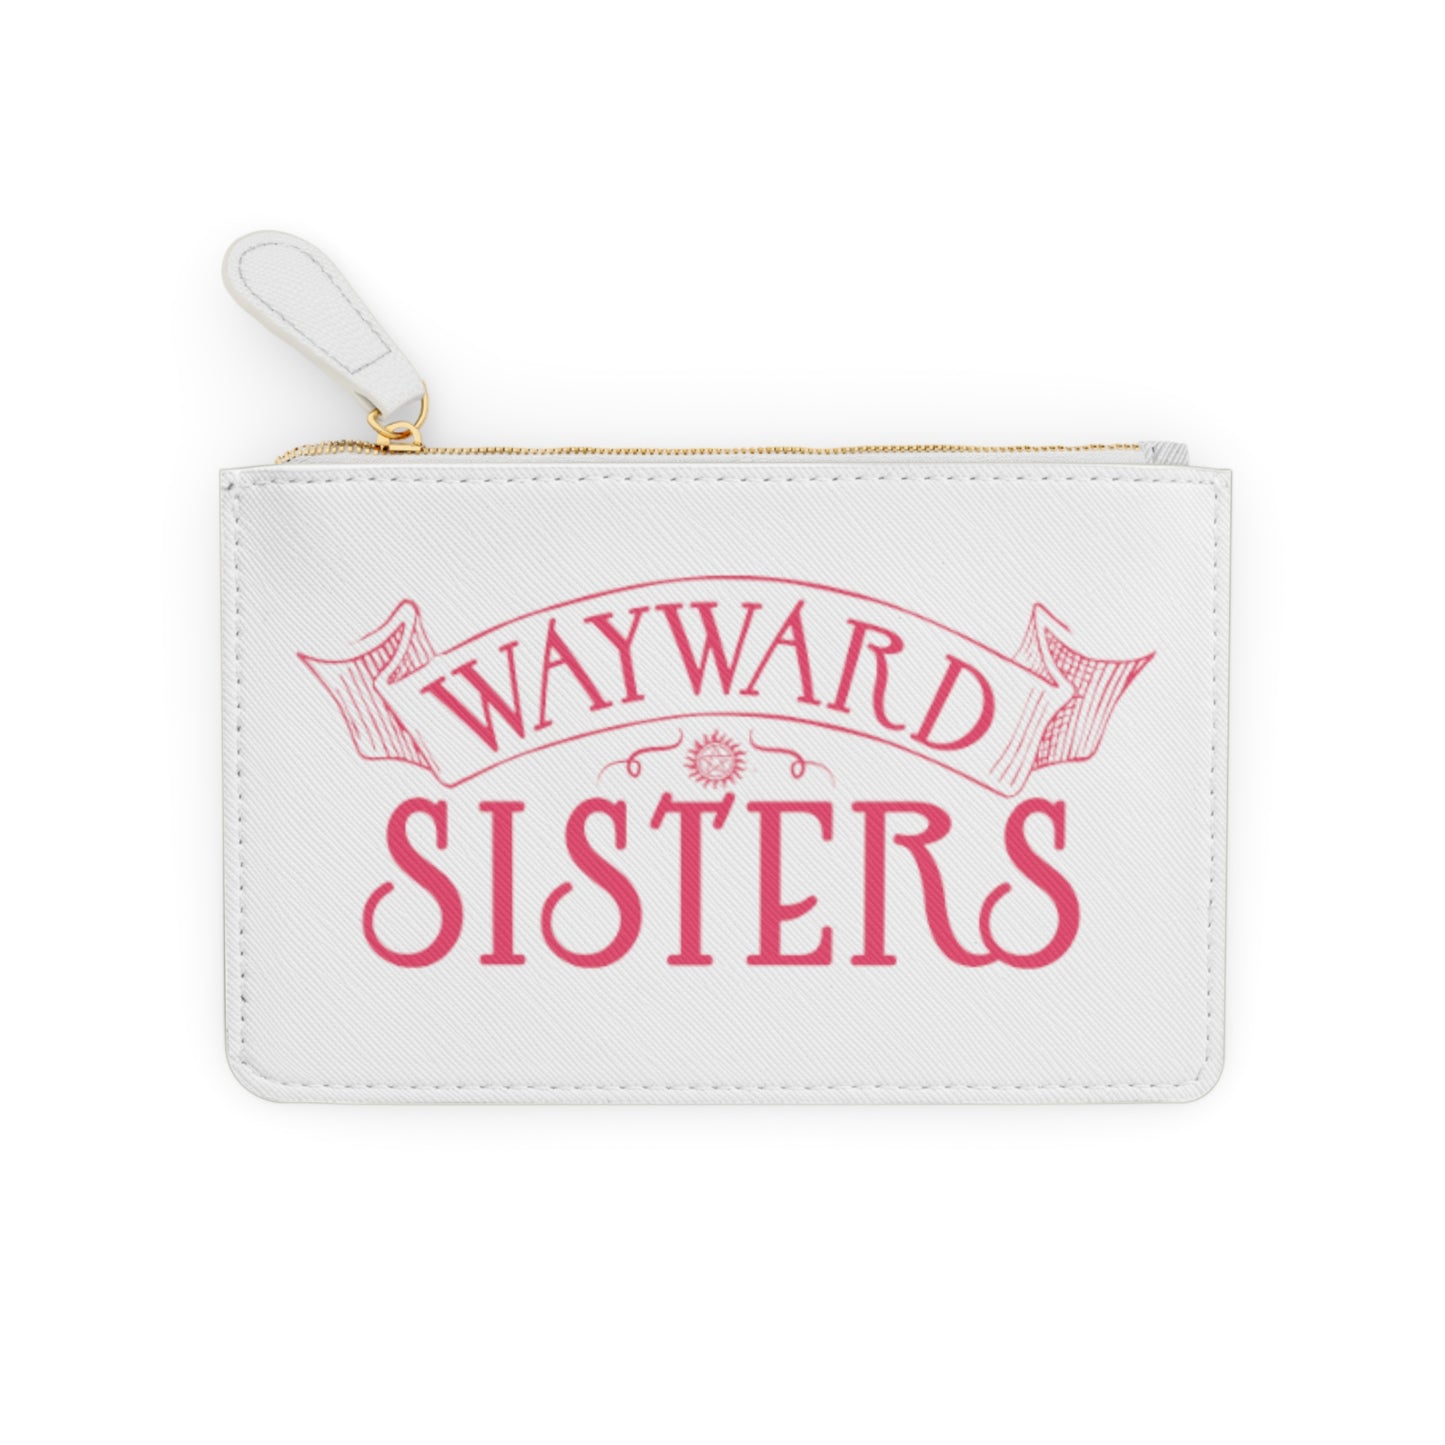 Wayward Sisters Mini Clutch Bag